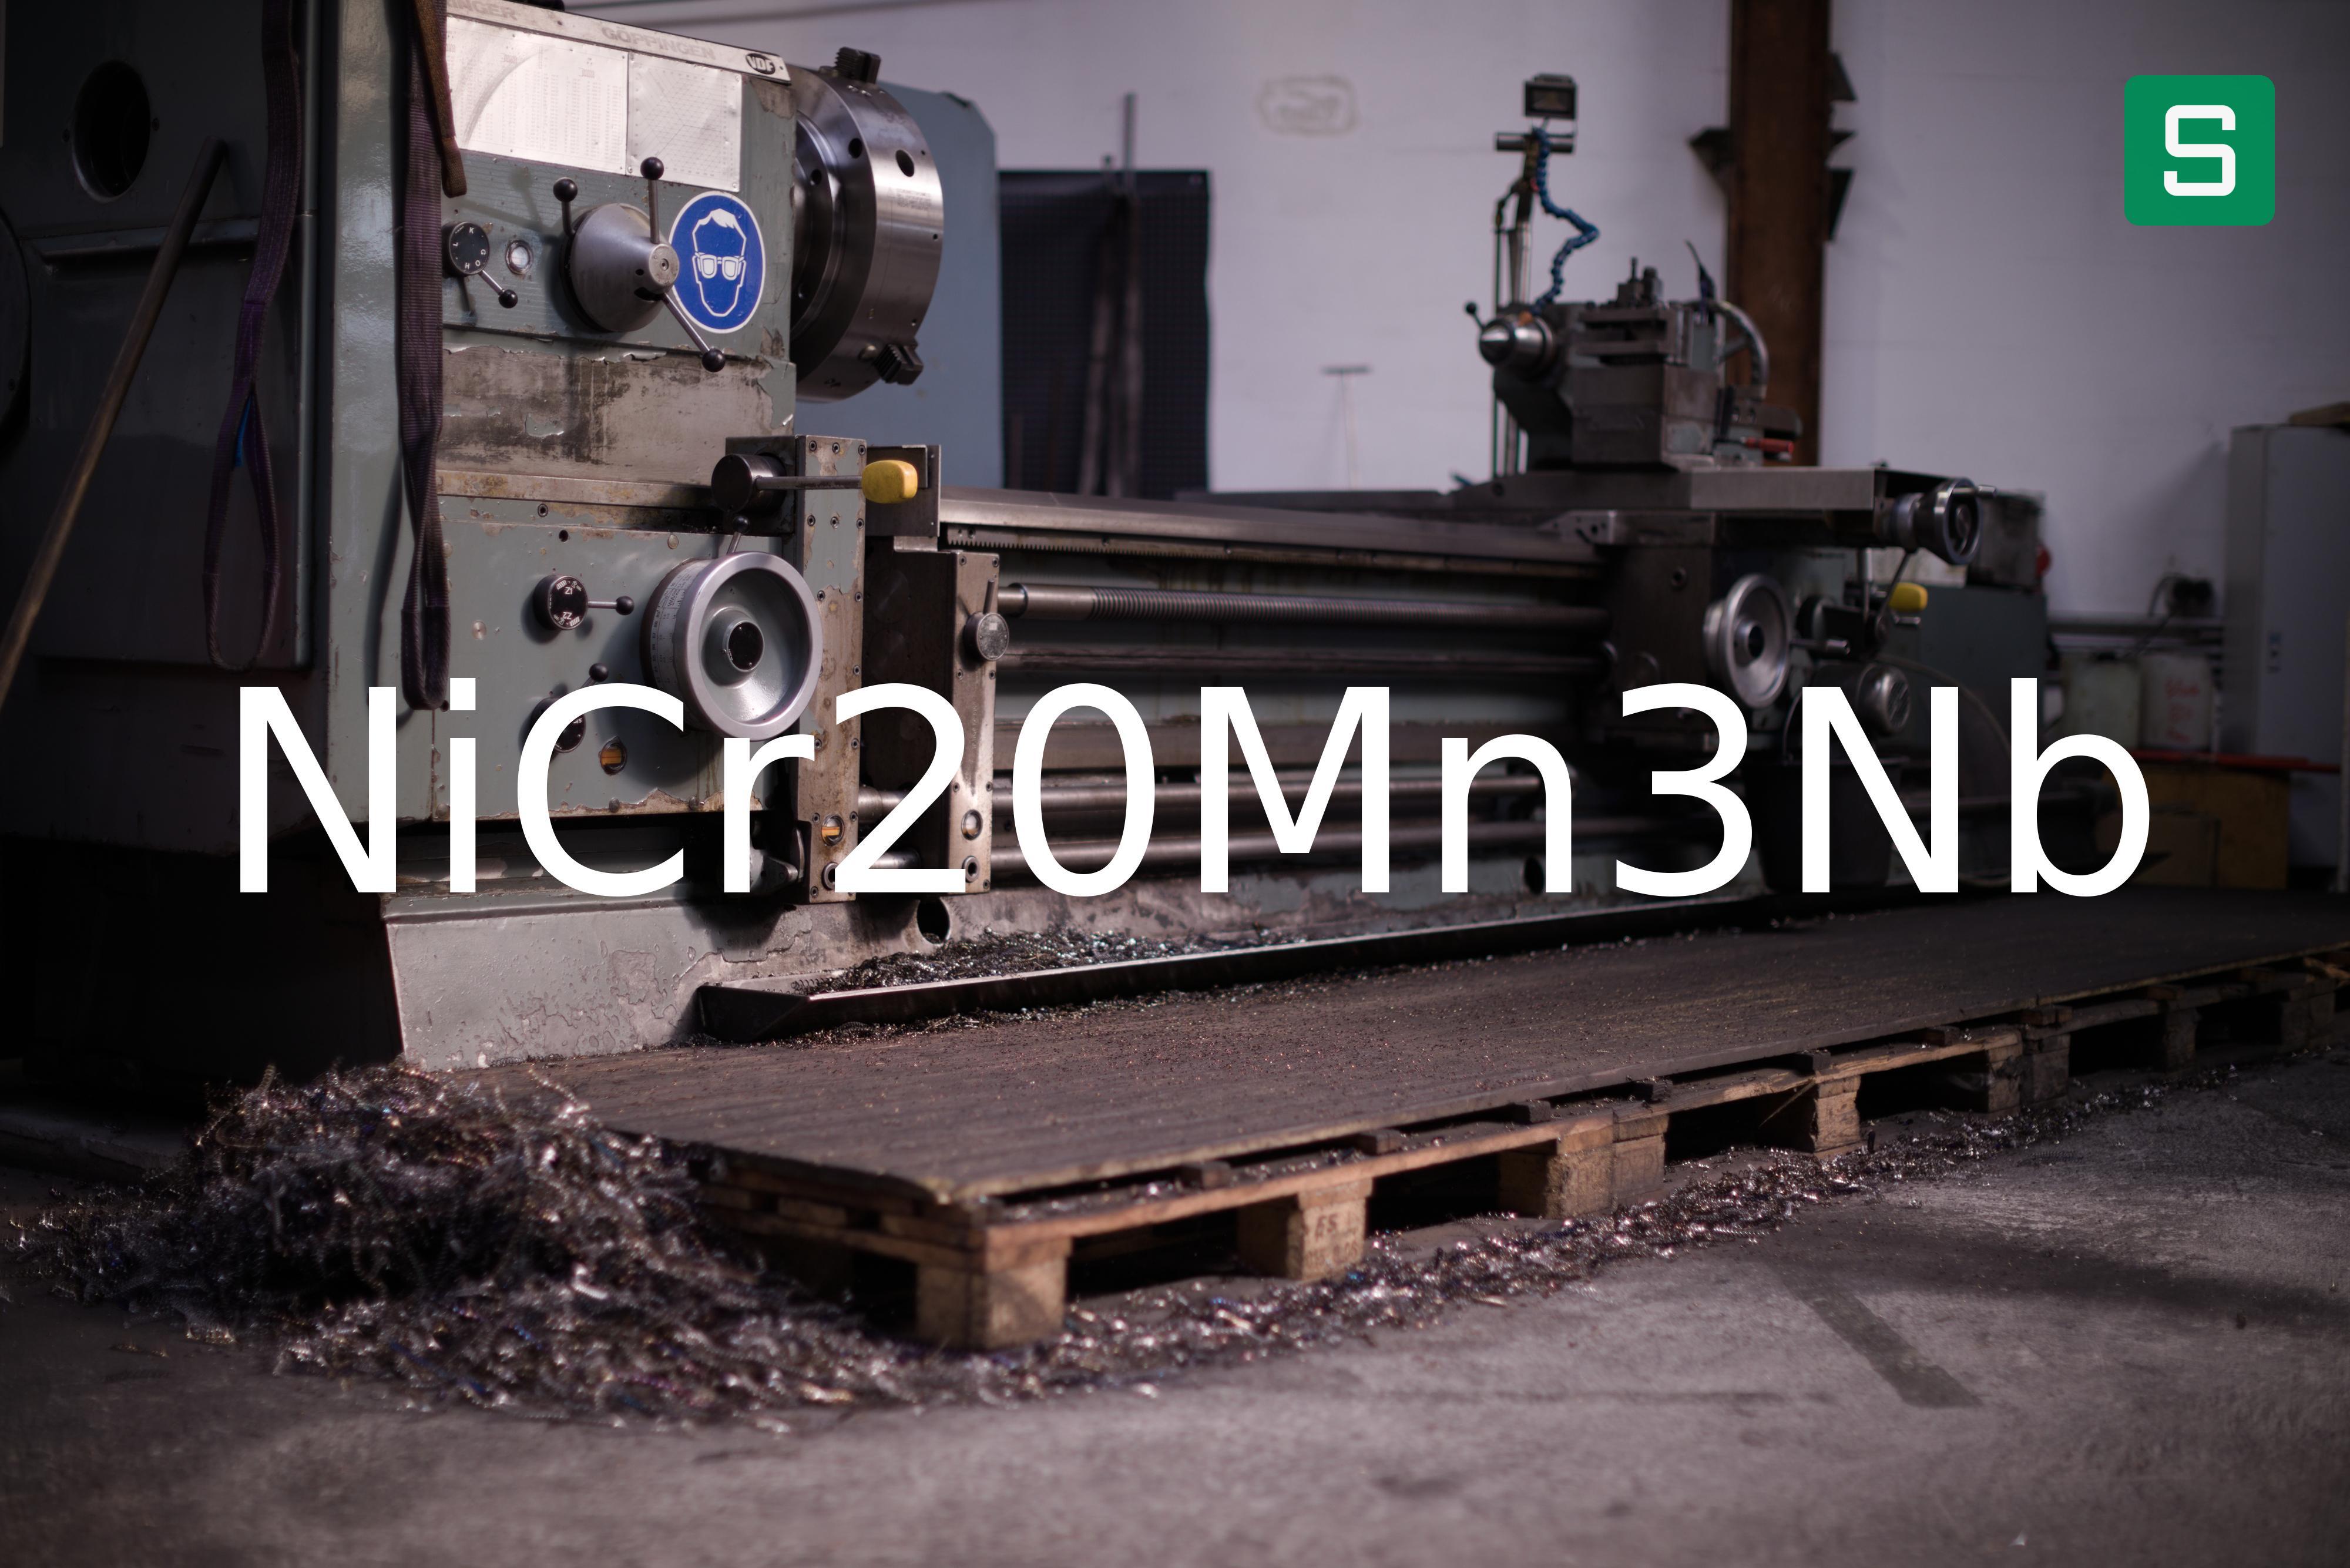 Steel Material: NiCr20Mn3Nb